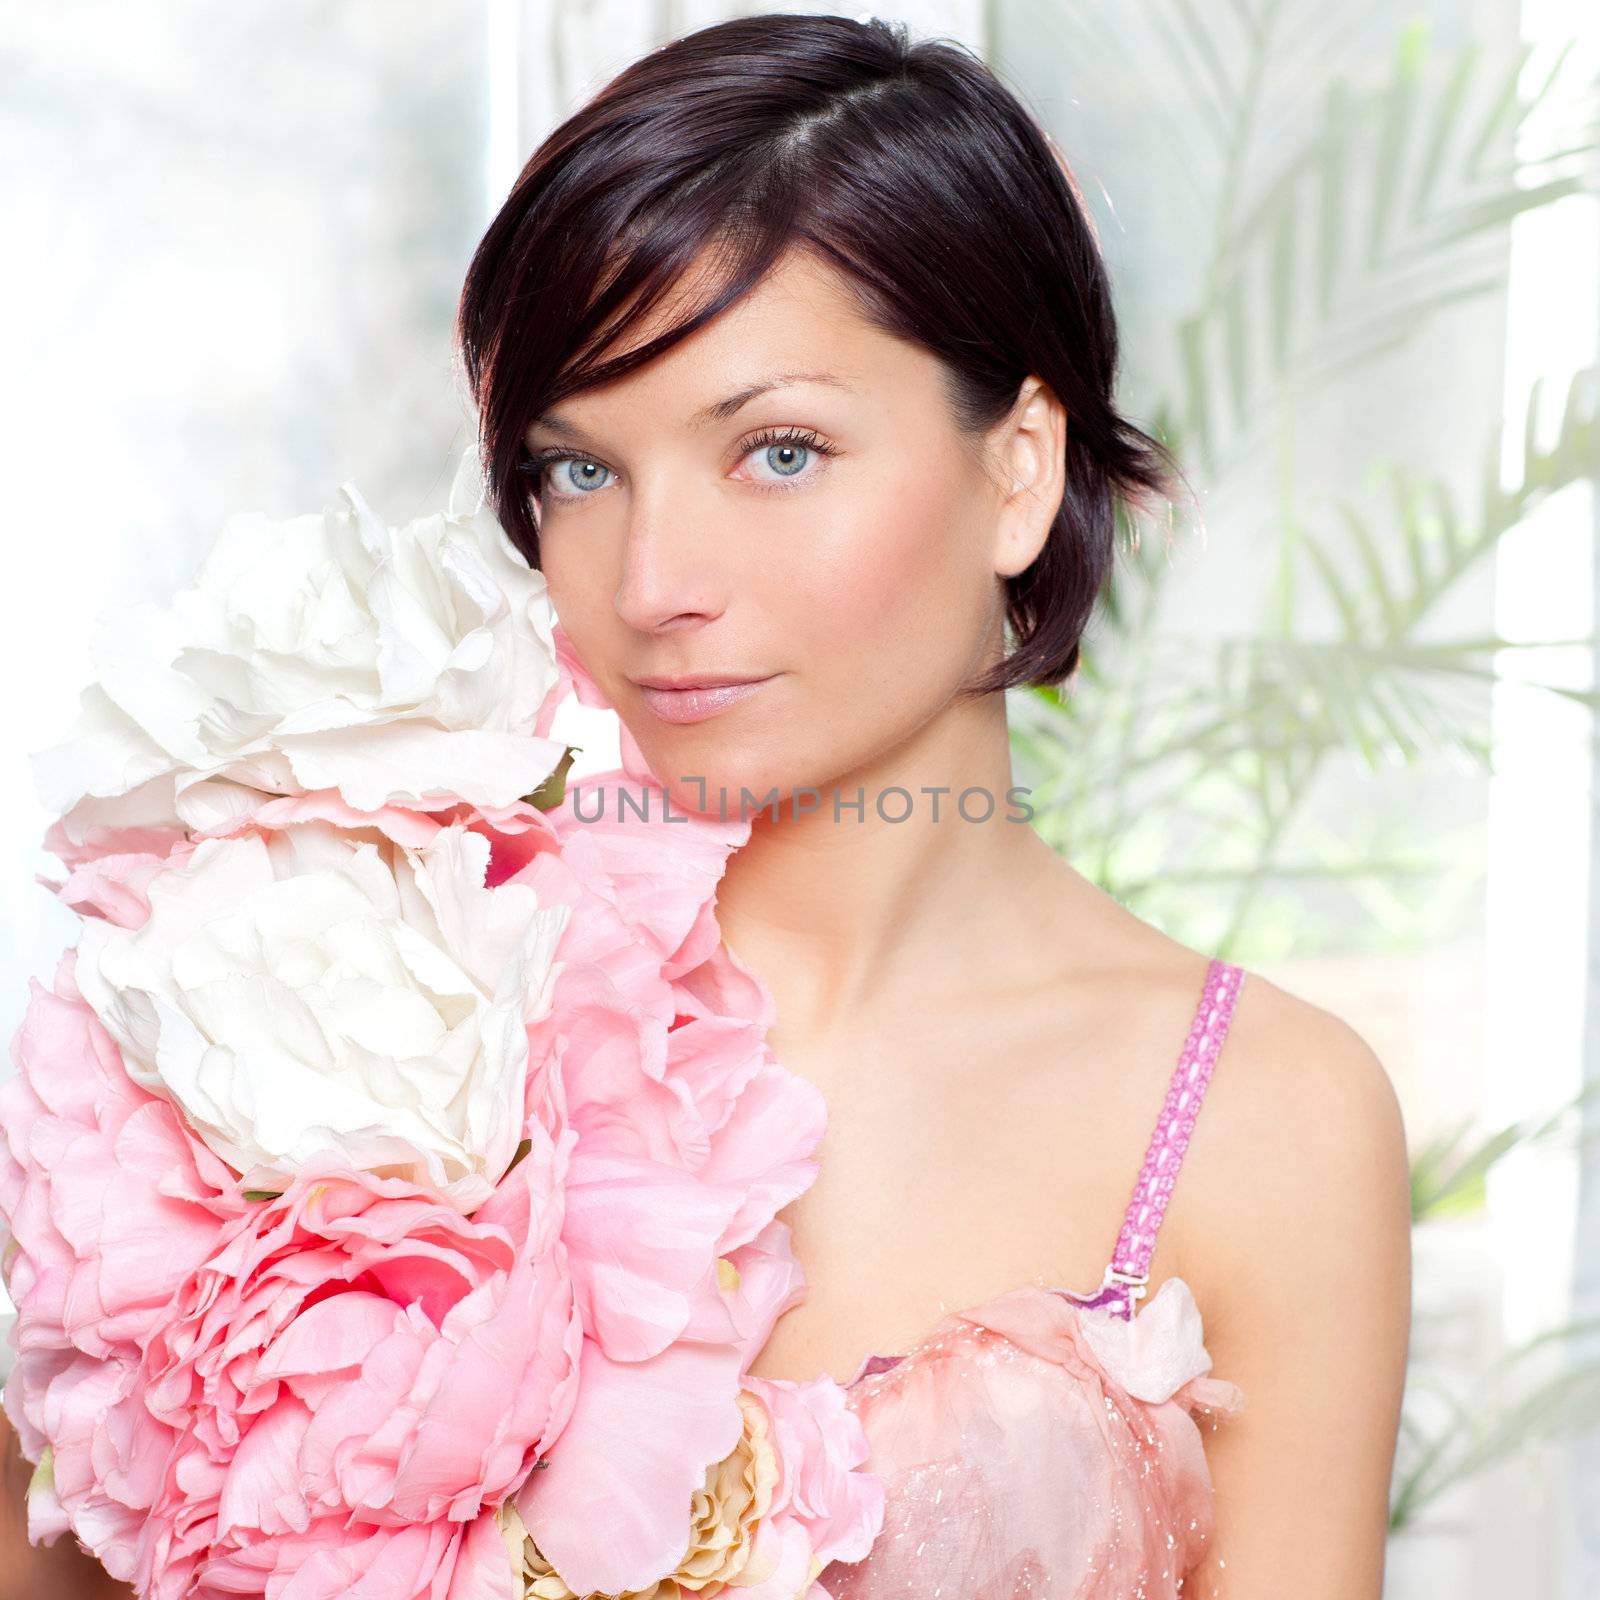 beautiful flowers woman with spring pink dress by lunamarina